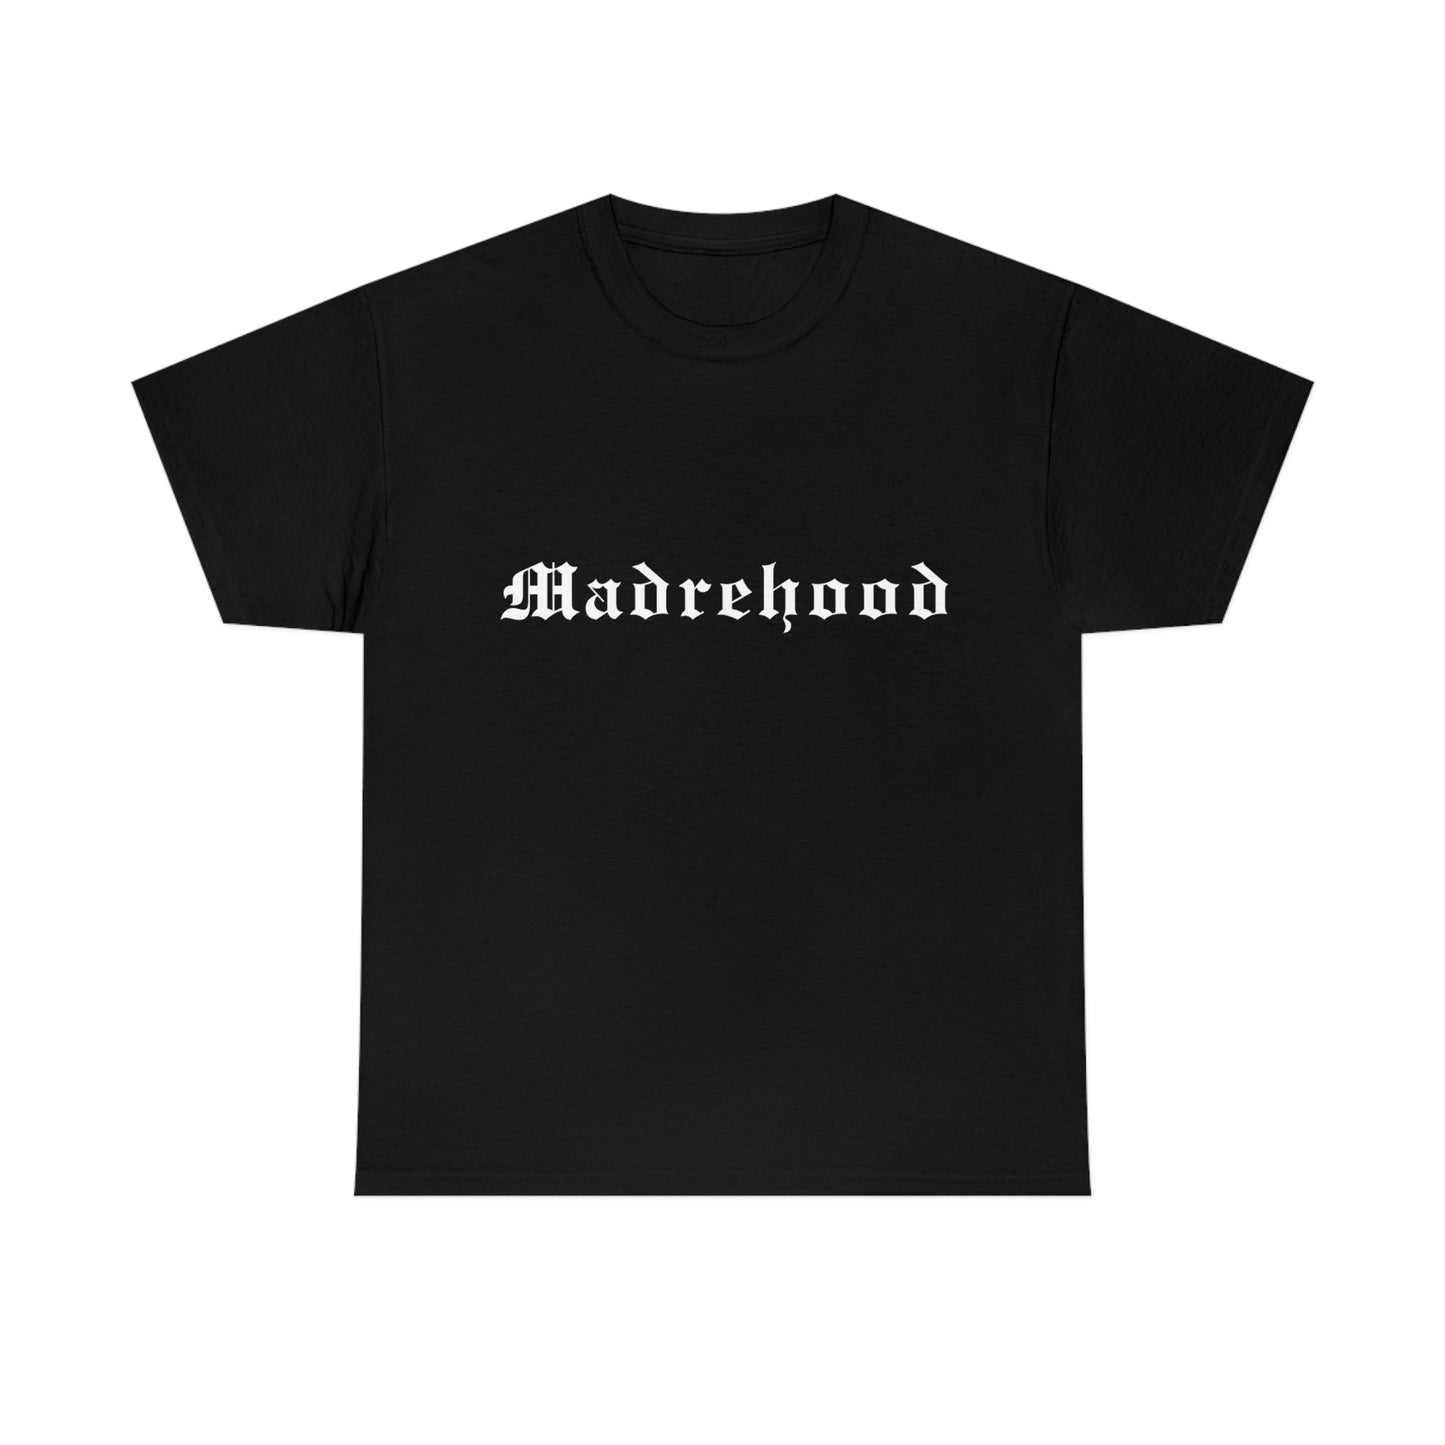 MADREHOOD T-shirt - Black